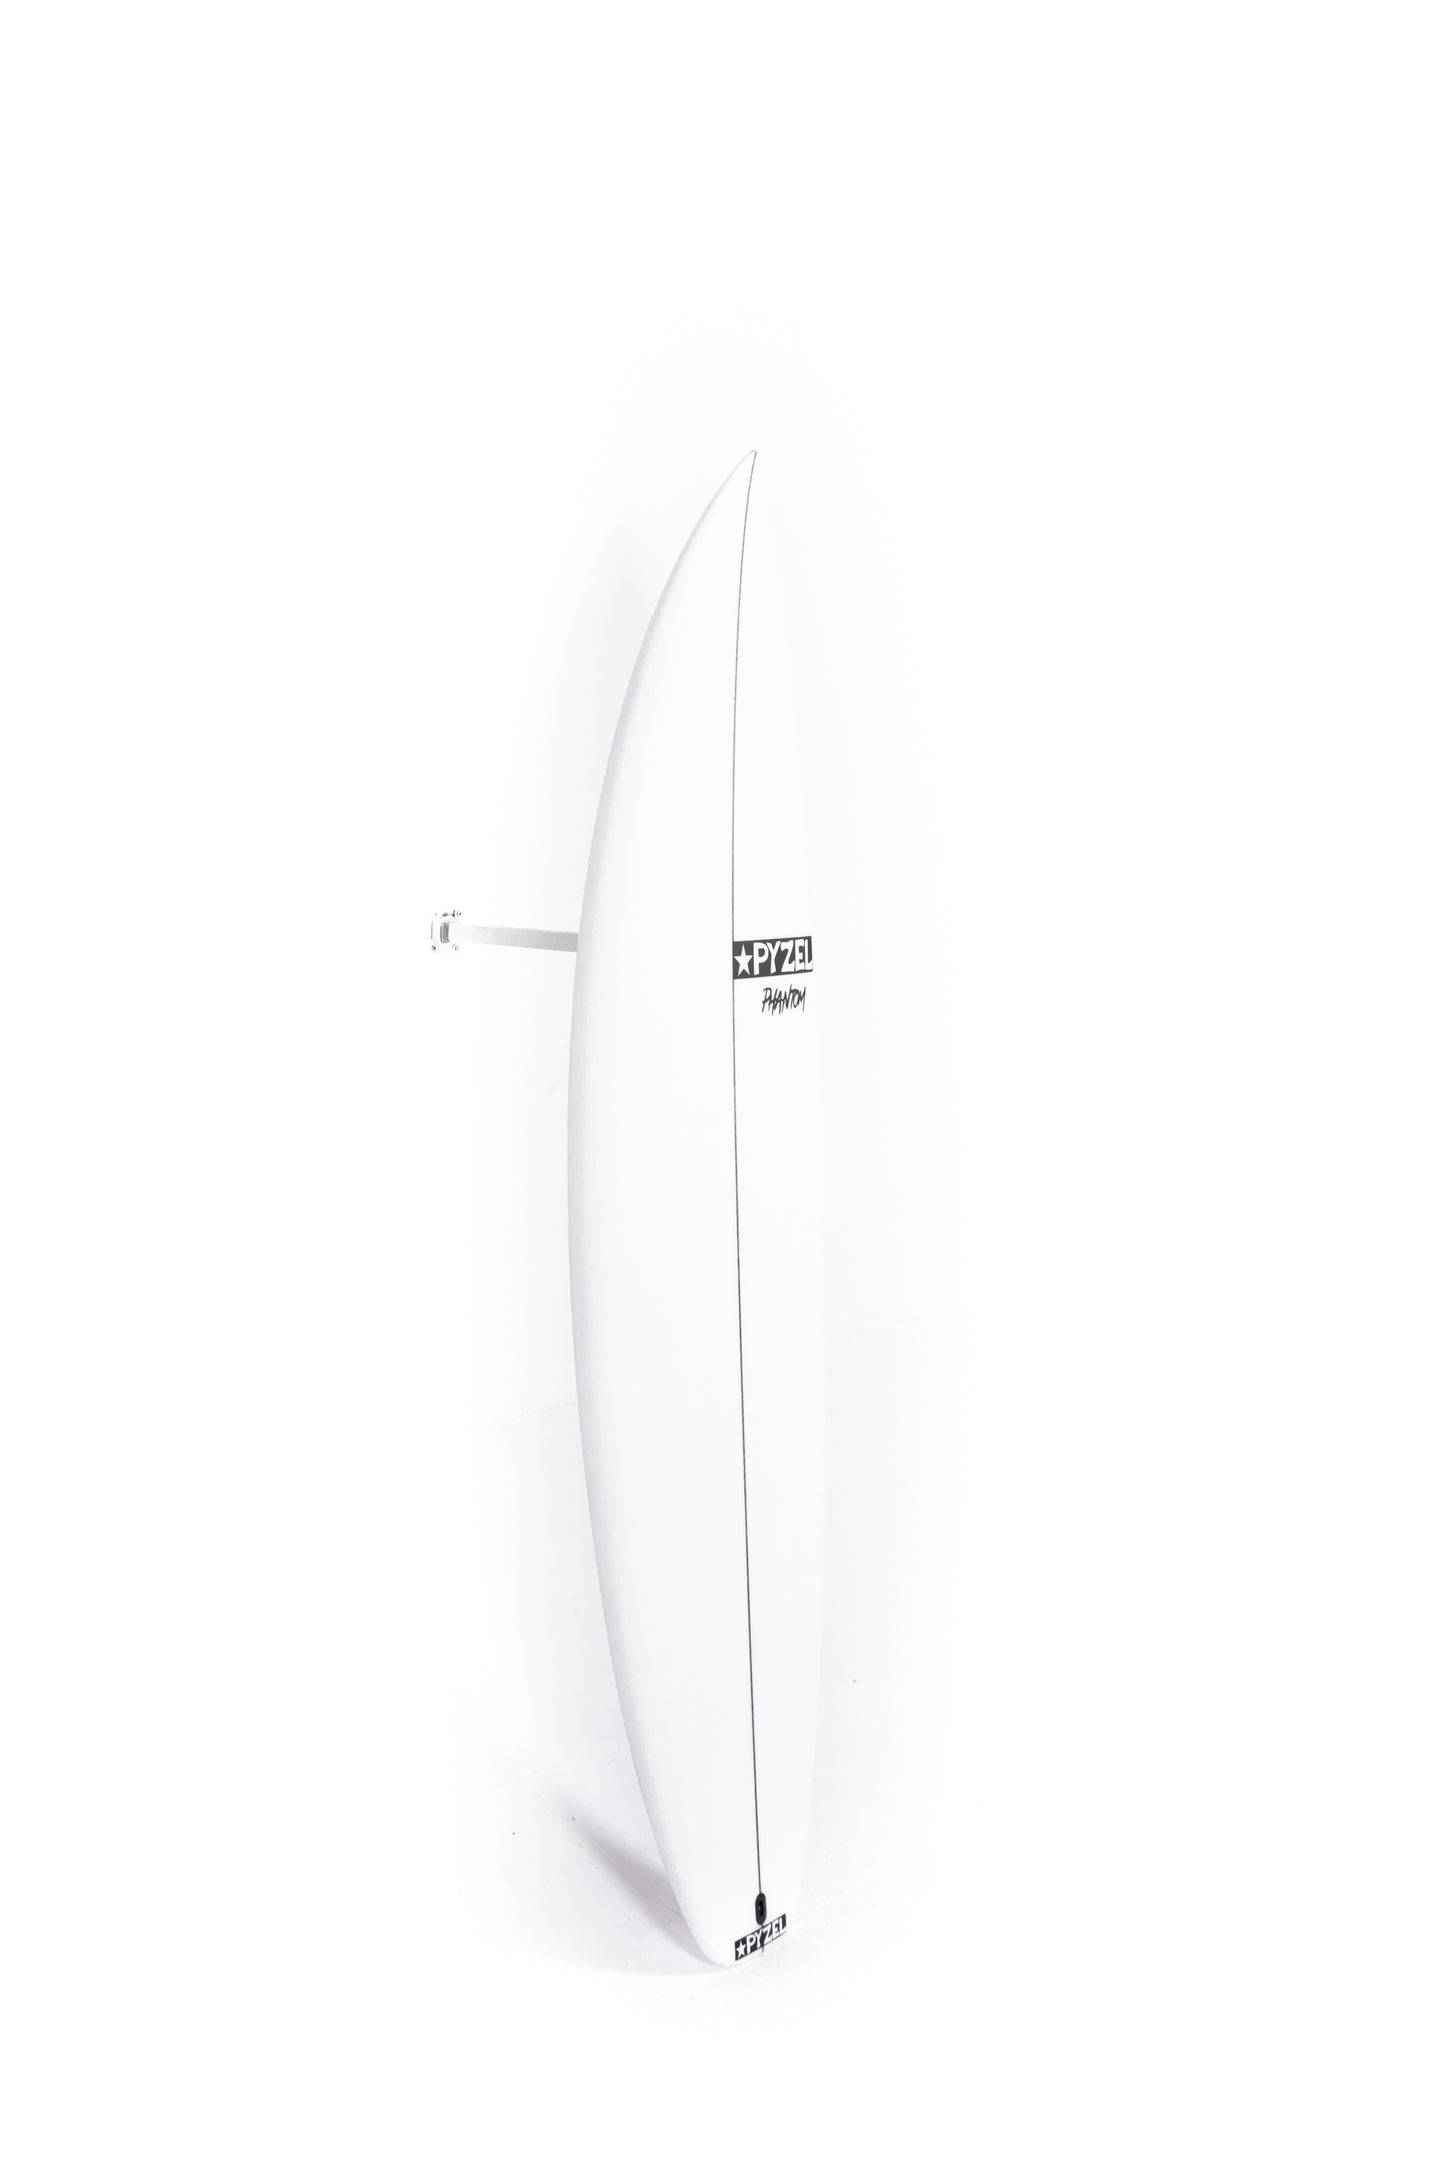 
                  
                    Pukas-Surf-Shop-Pyzel-Surfboards-Phantom-Jon-Pyzel-6_2
                  
                